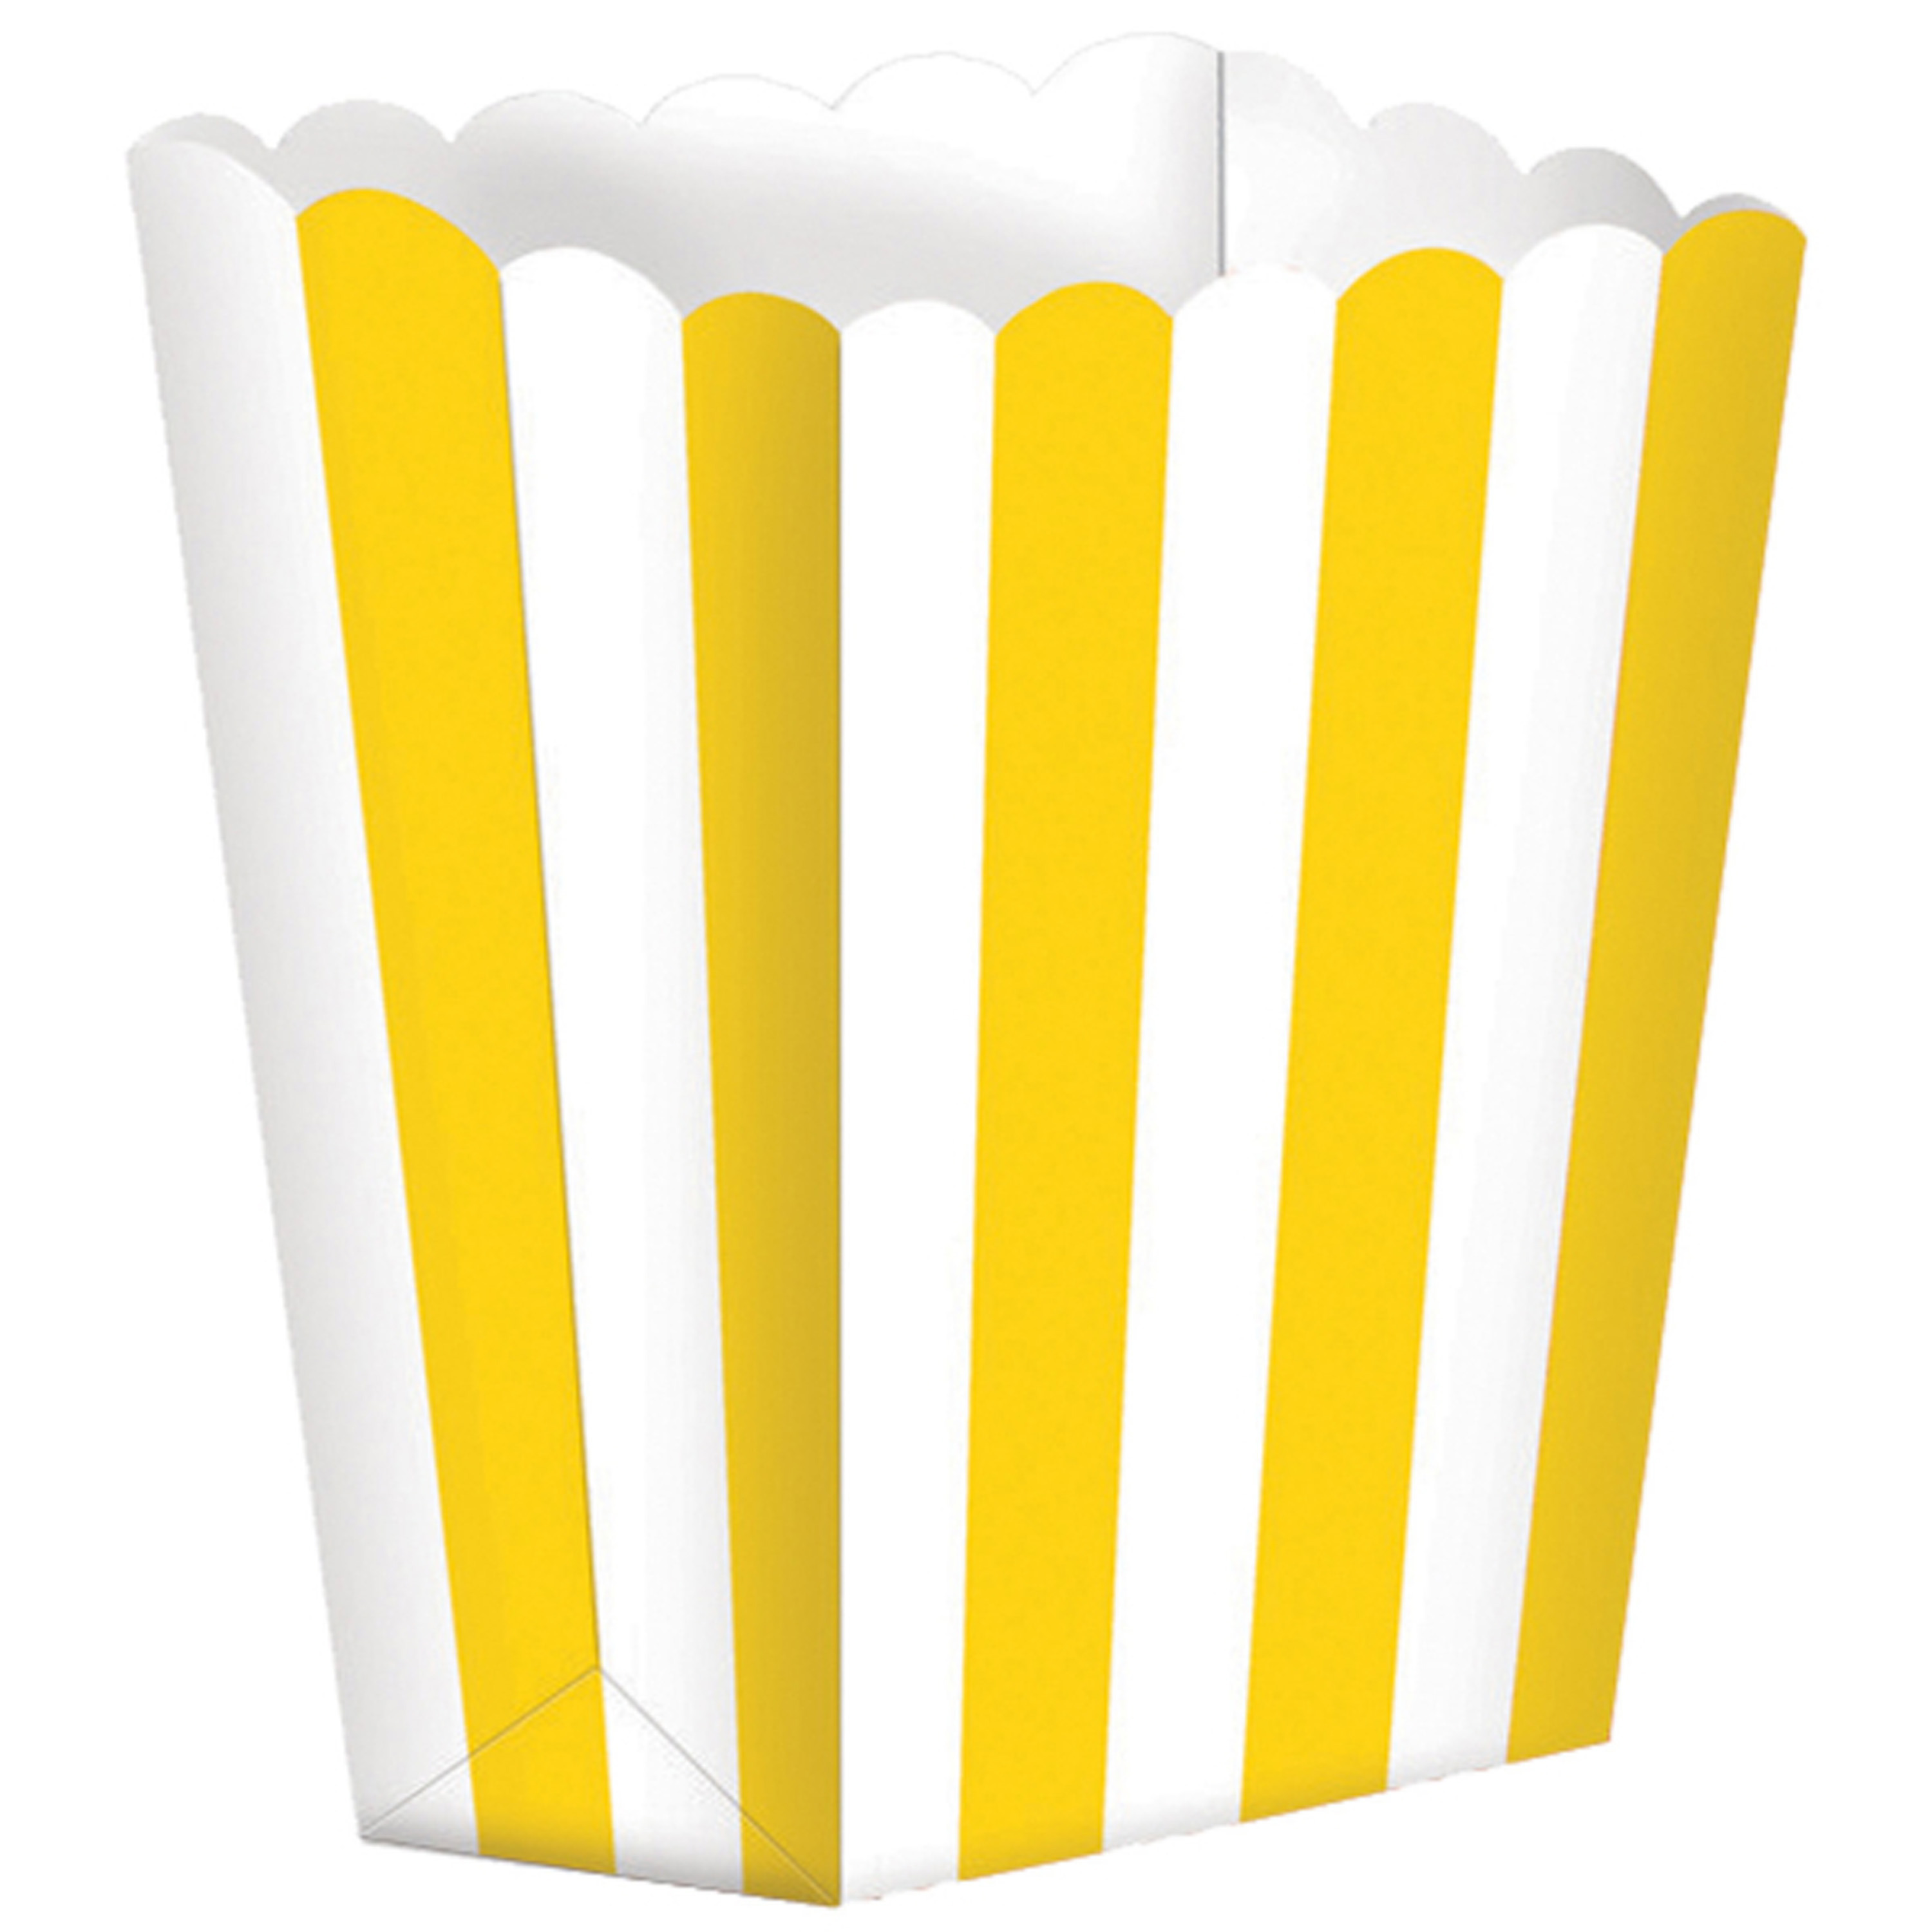 5x stuks Popcorn snoep bakjes geel wit